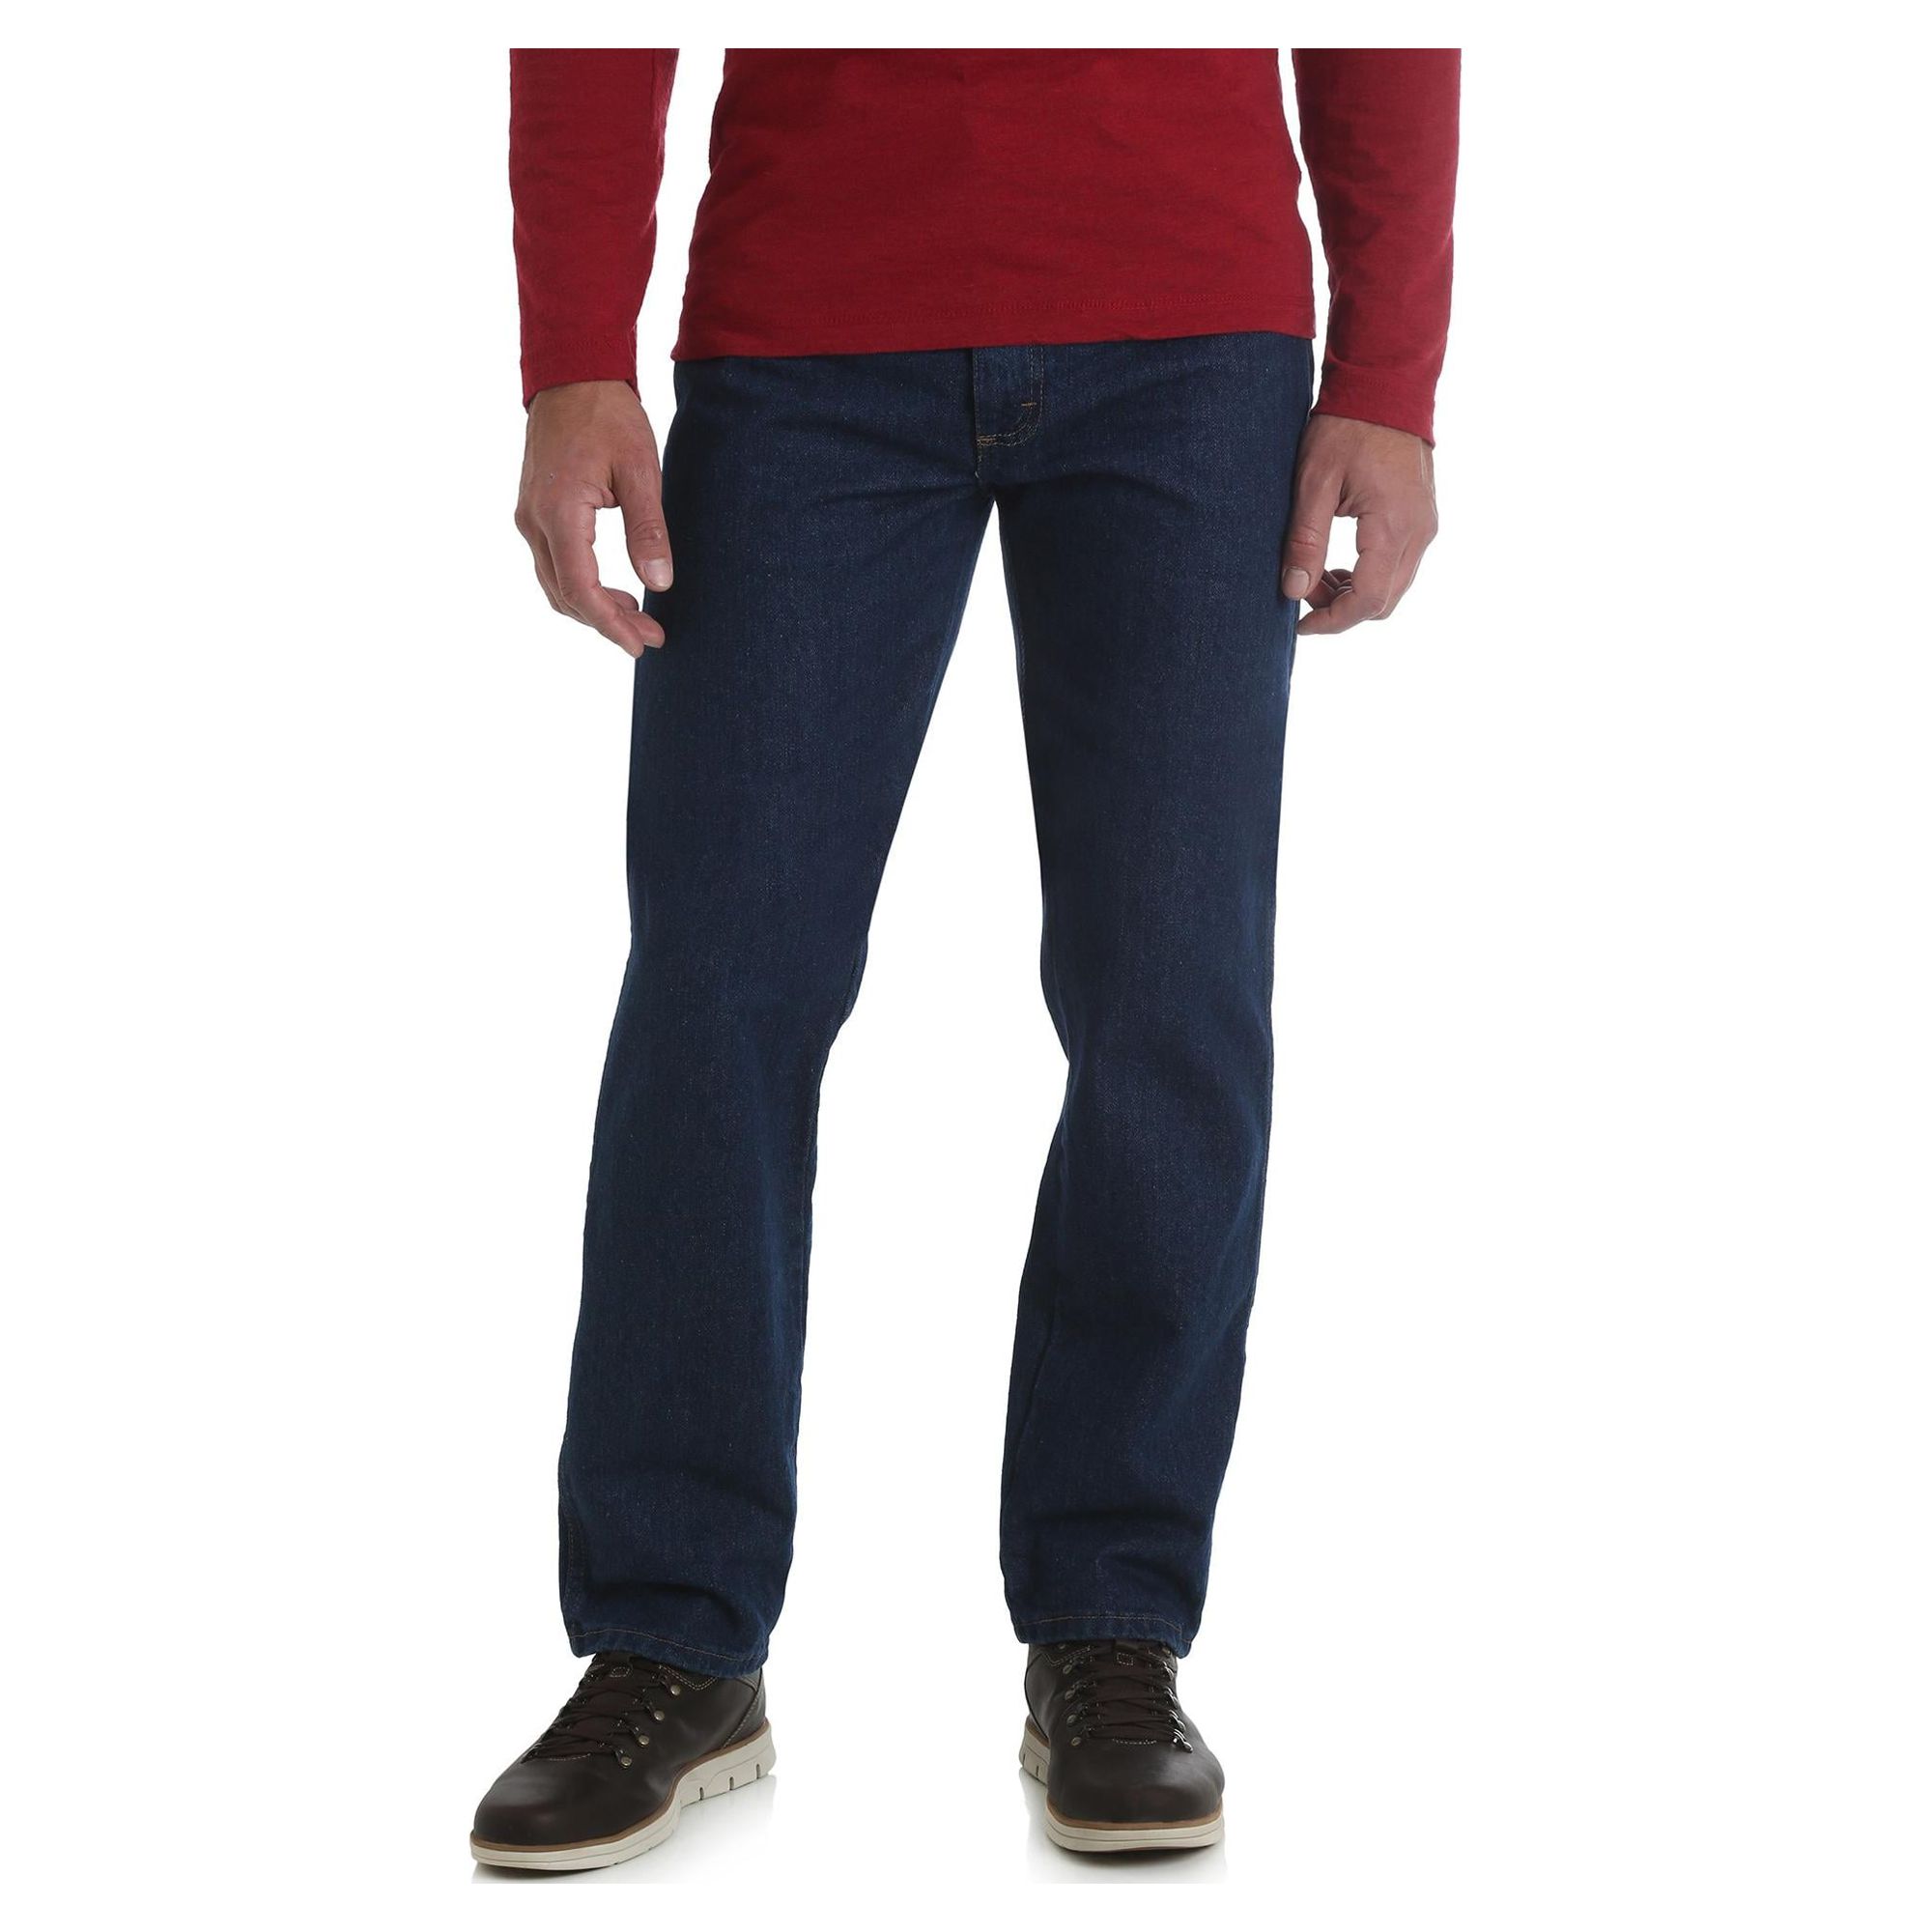 Wrangler Rustler Men's and Big Men's Regular Fit Jeans - image 1 of 6